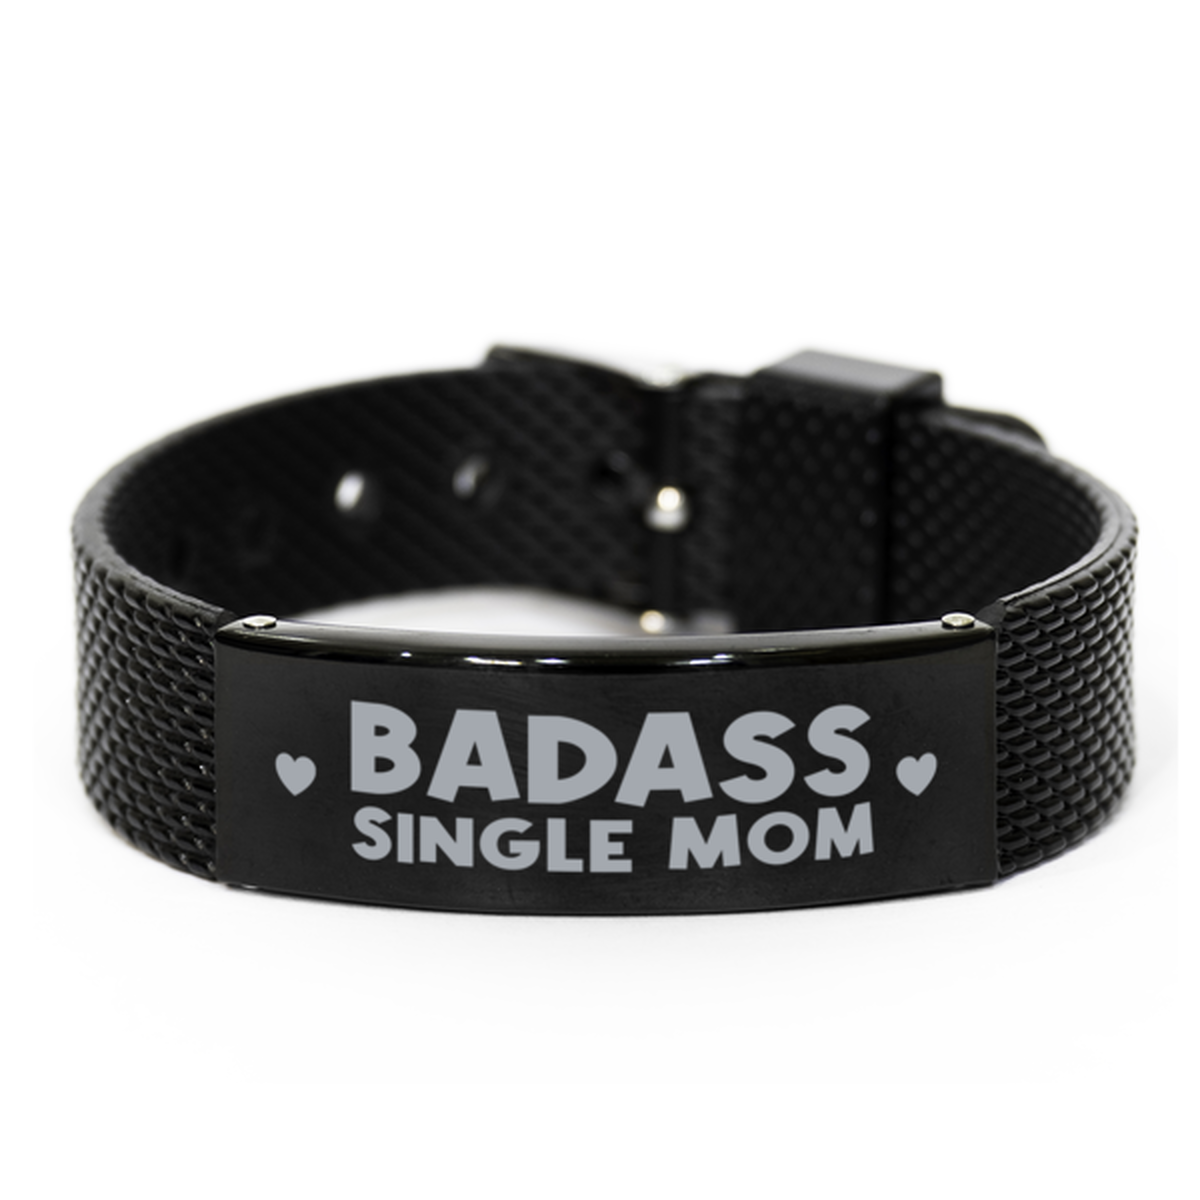 Single mom Black Shark Mesh Bracelet, Badass Single mom, Funny Family Gifts For Single mom From Son Daughter